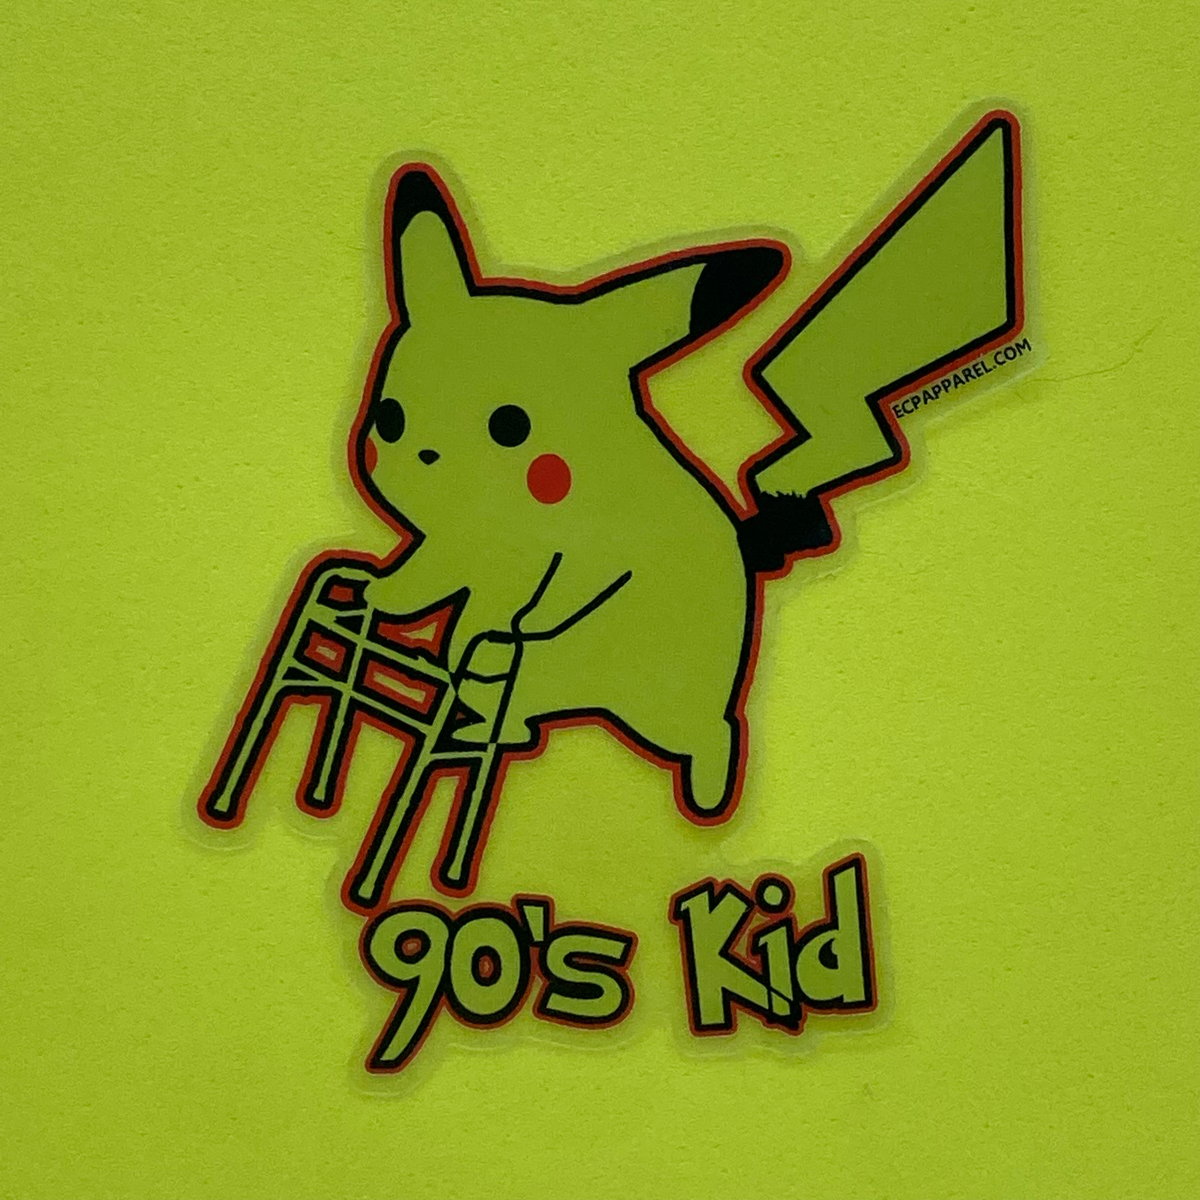 “90’s Kid” Die-cut Clear Sticker